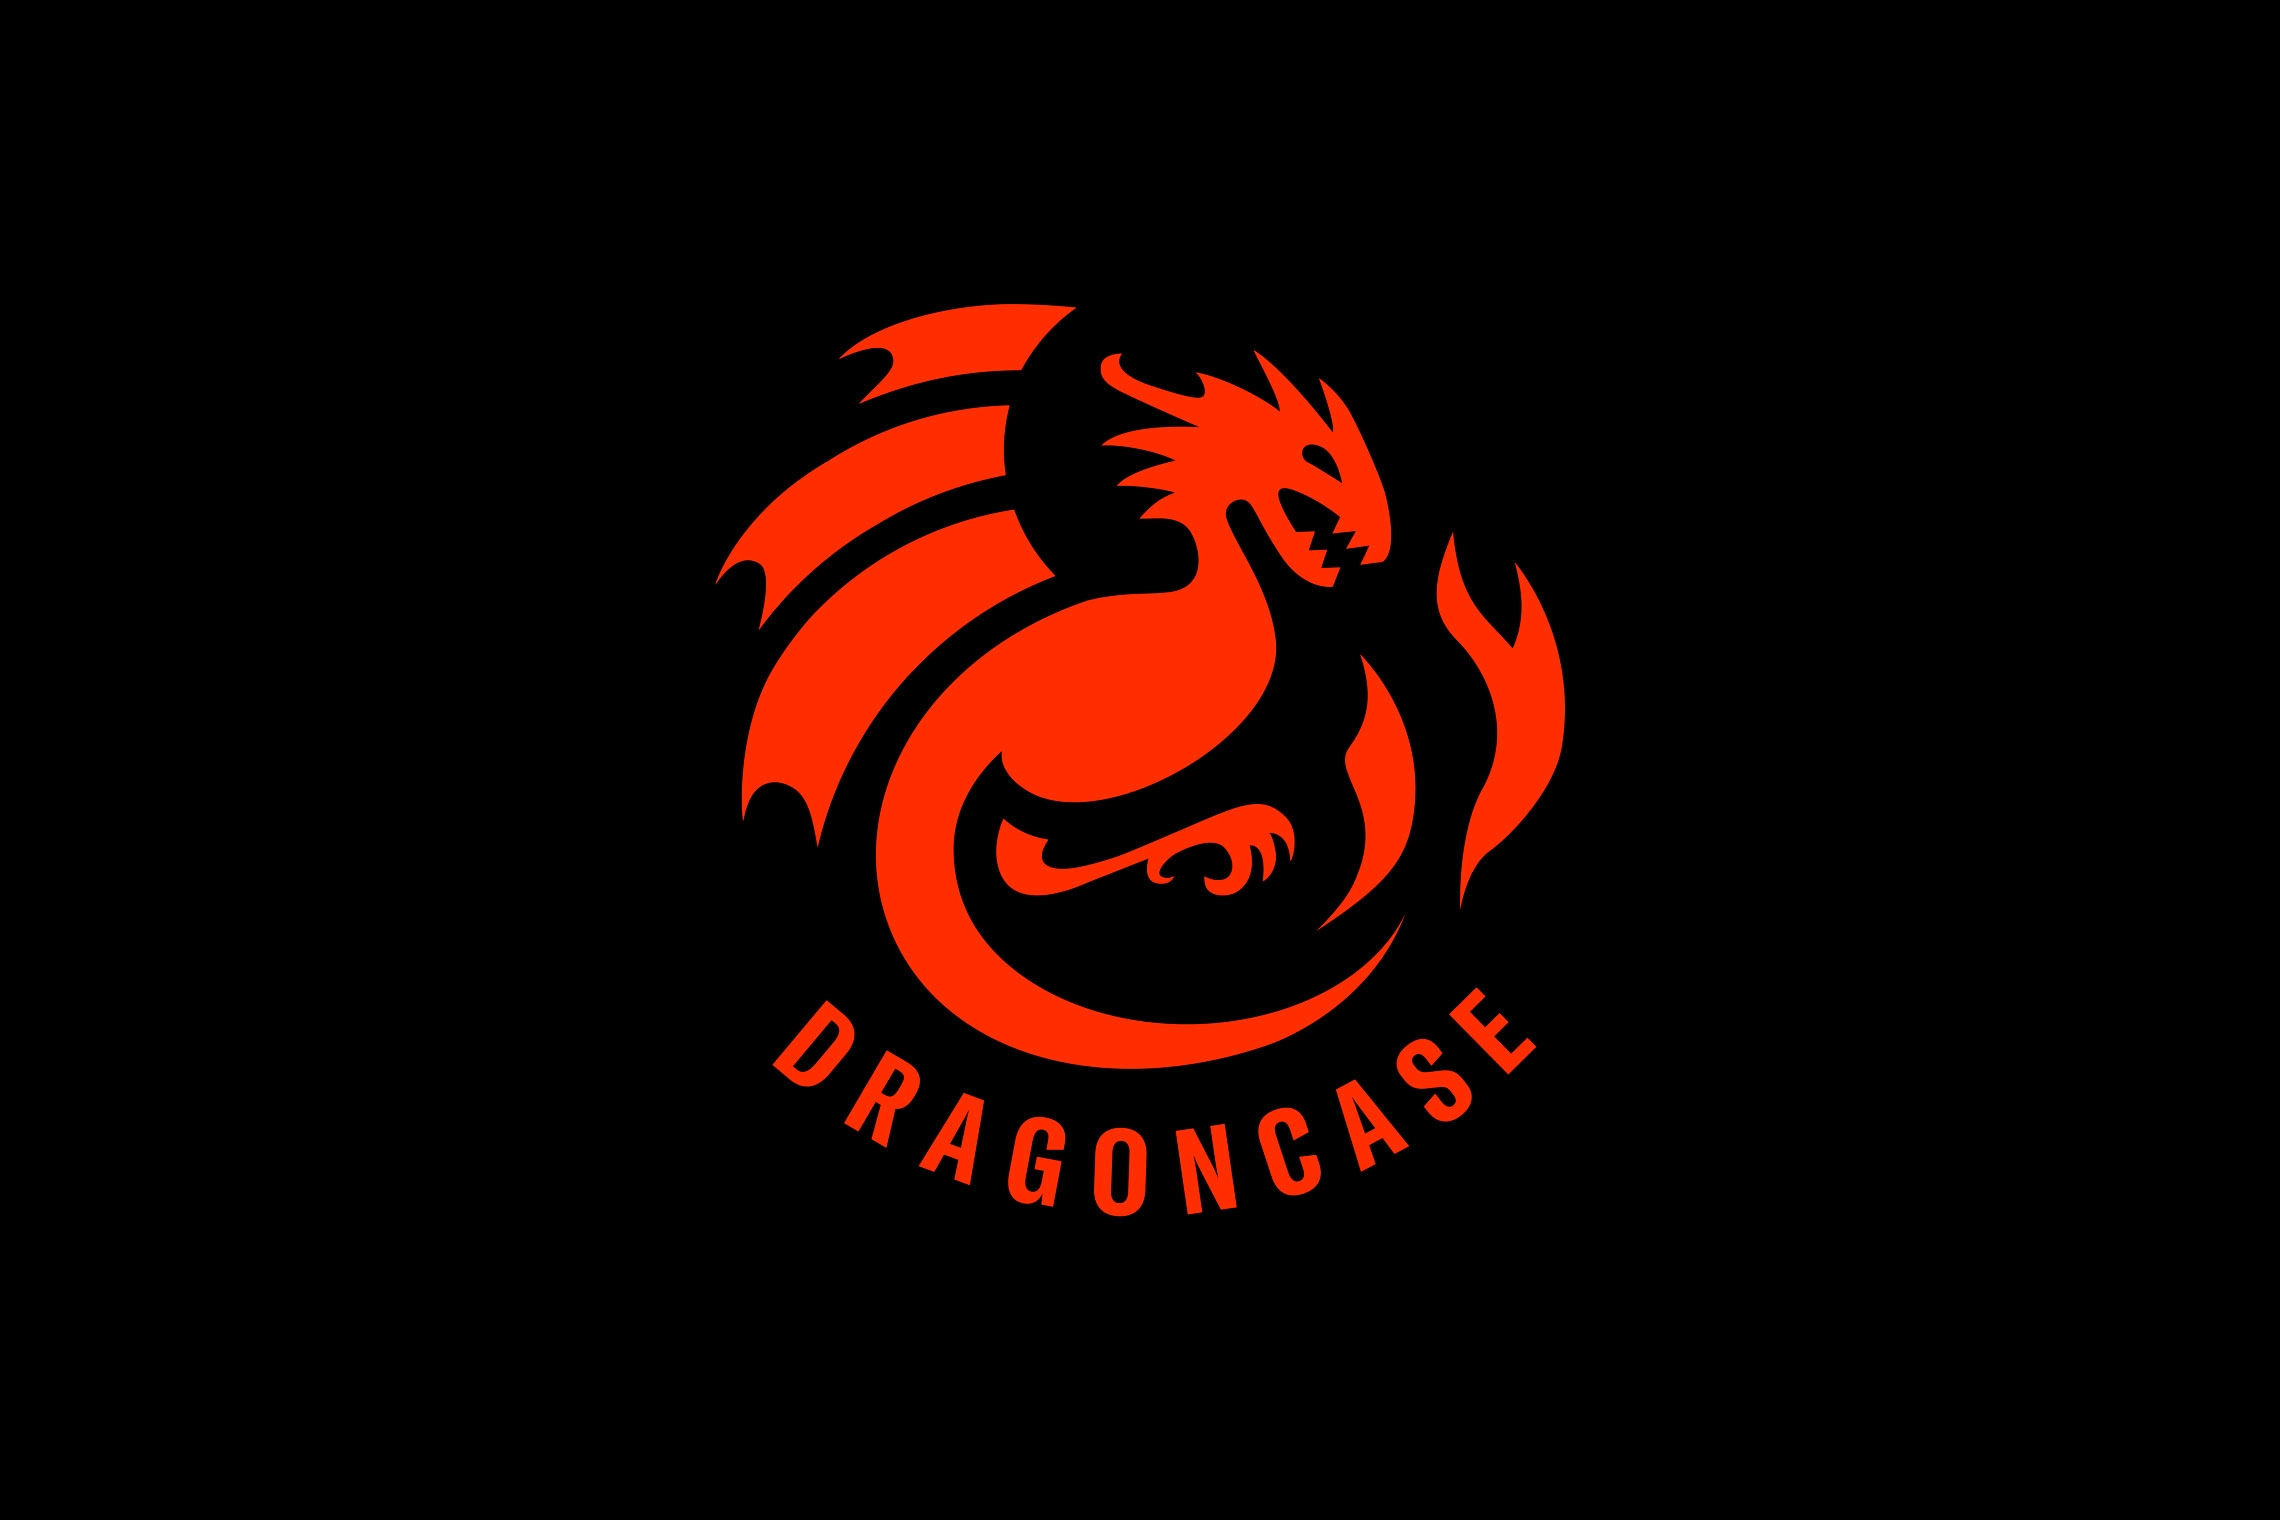 Dragoncase-04